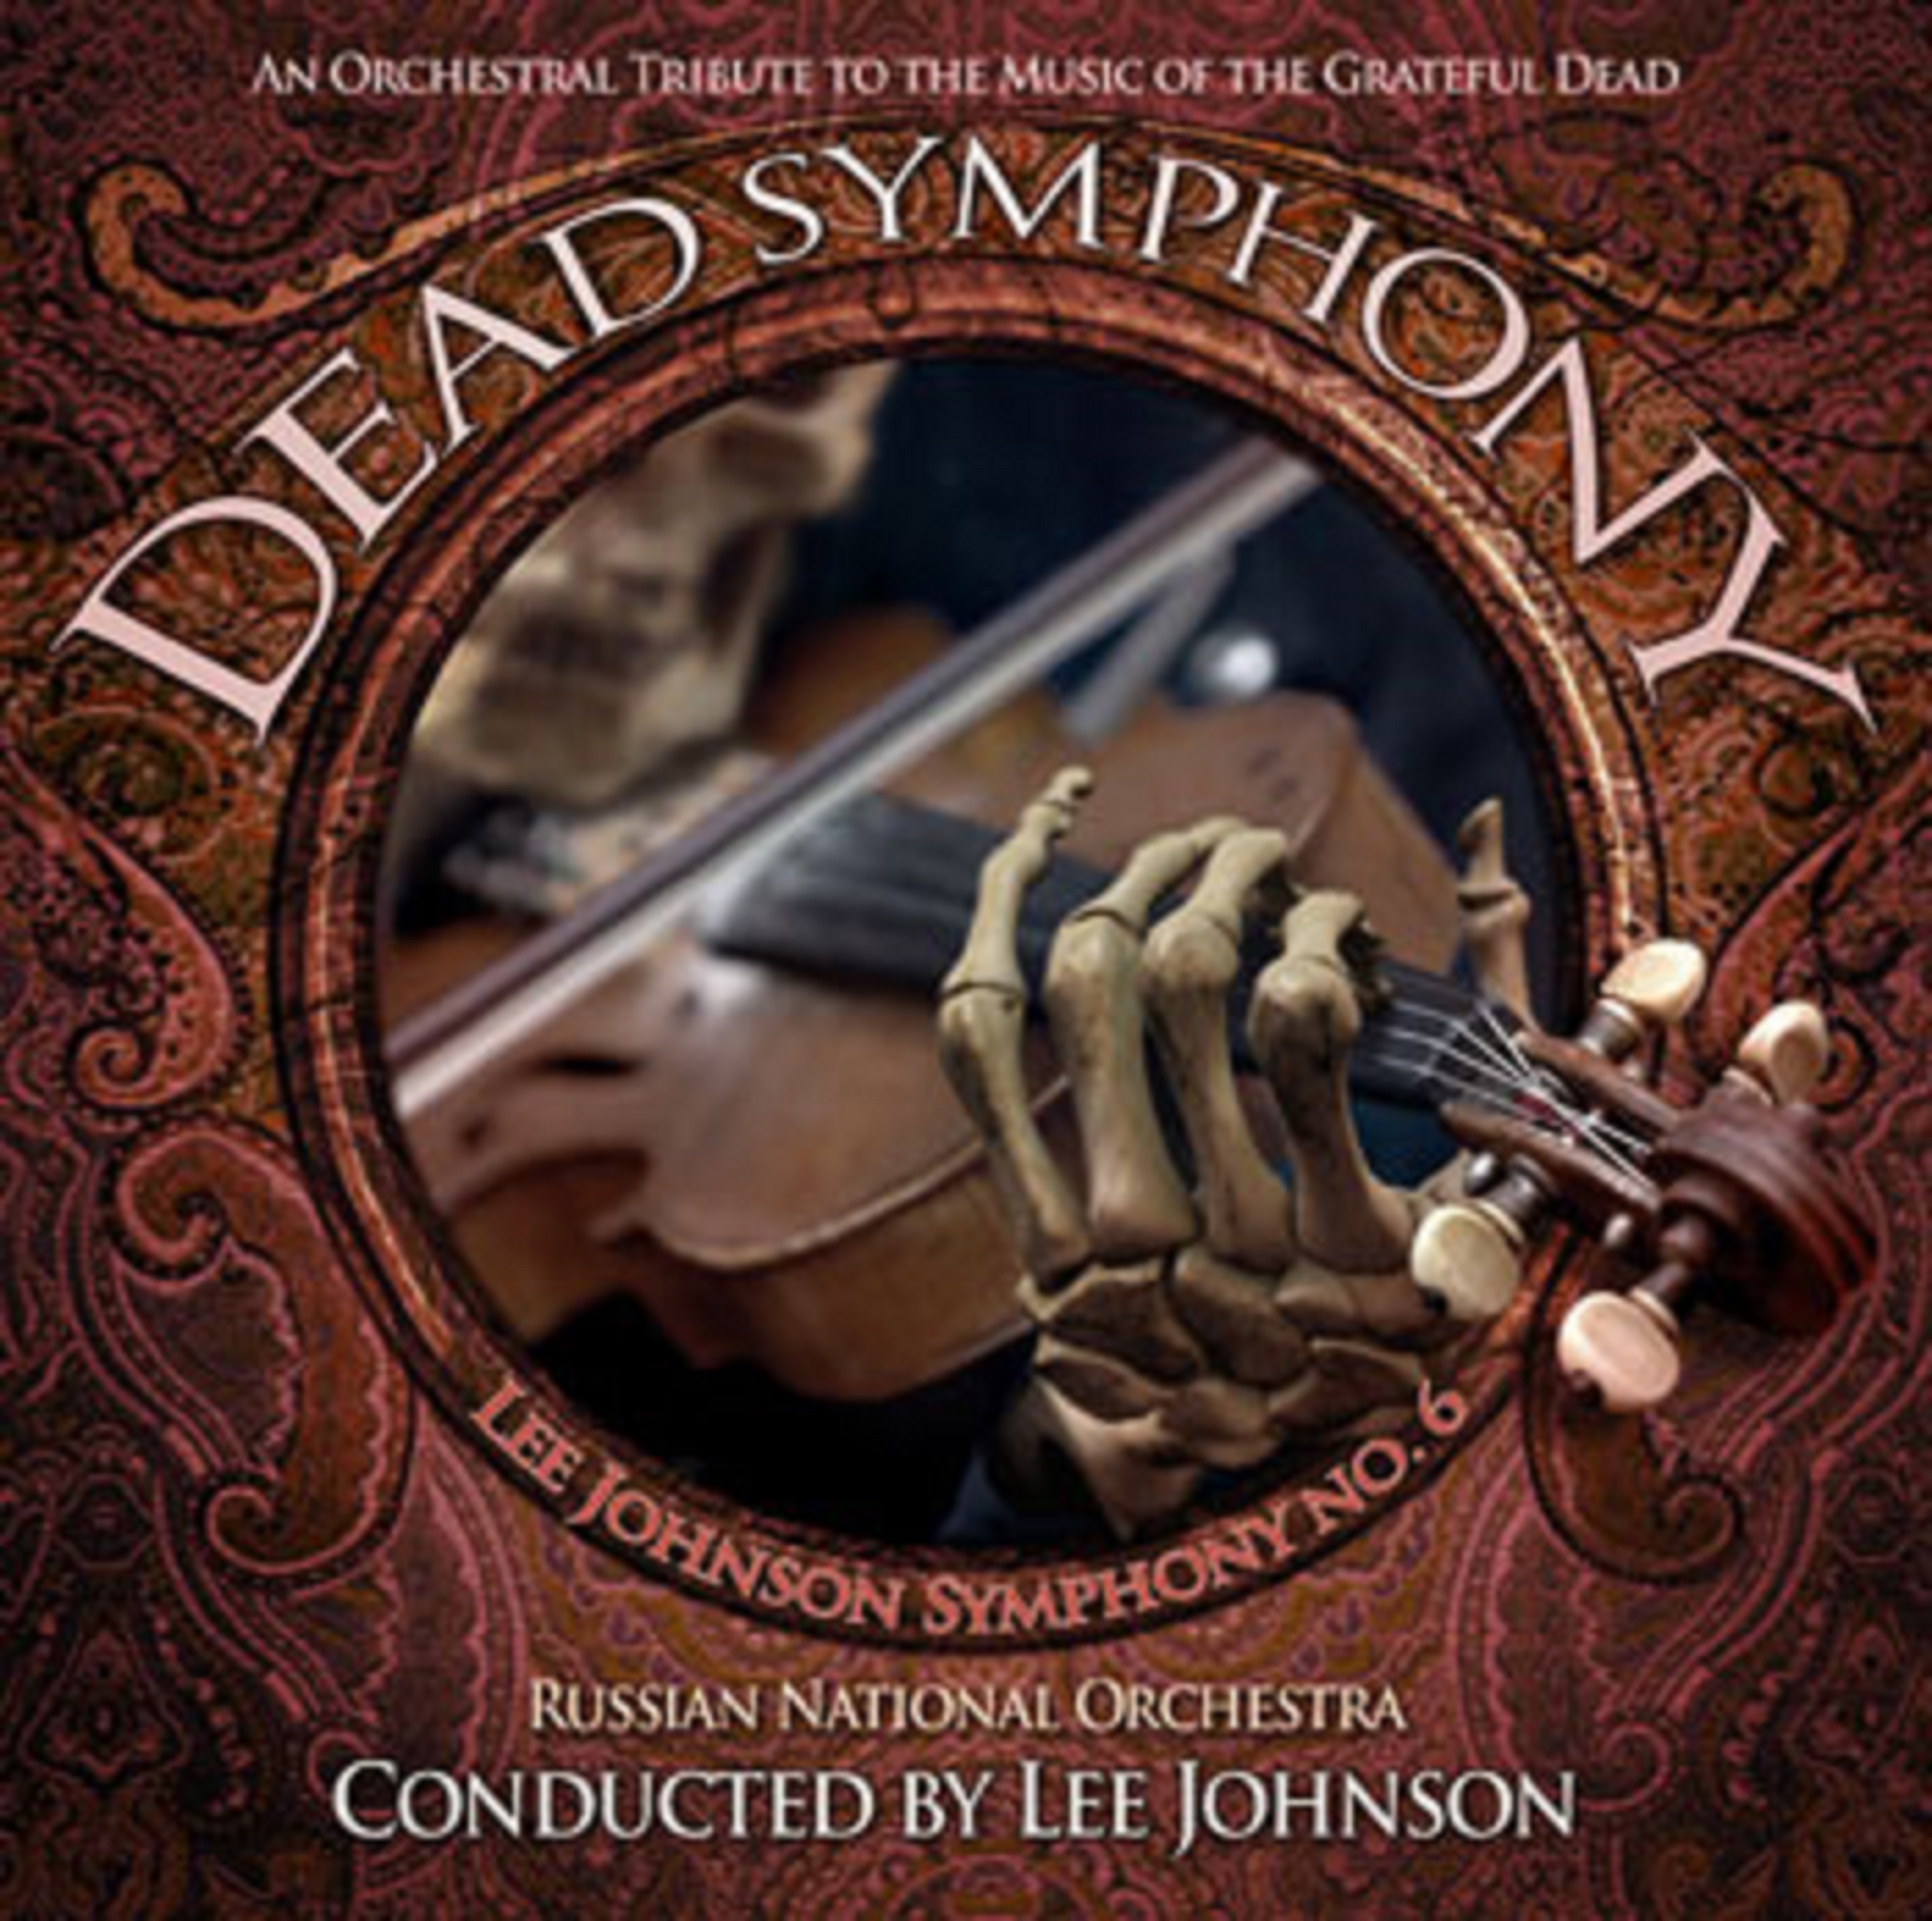 Lee Johnson's Dead Symphony #6 Live